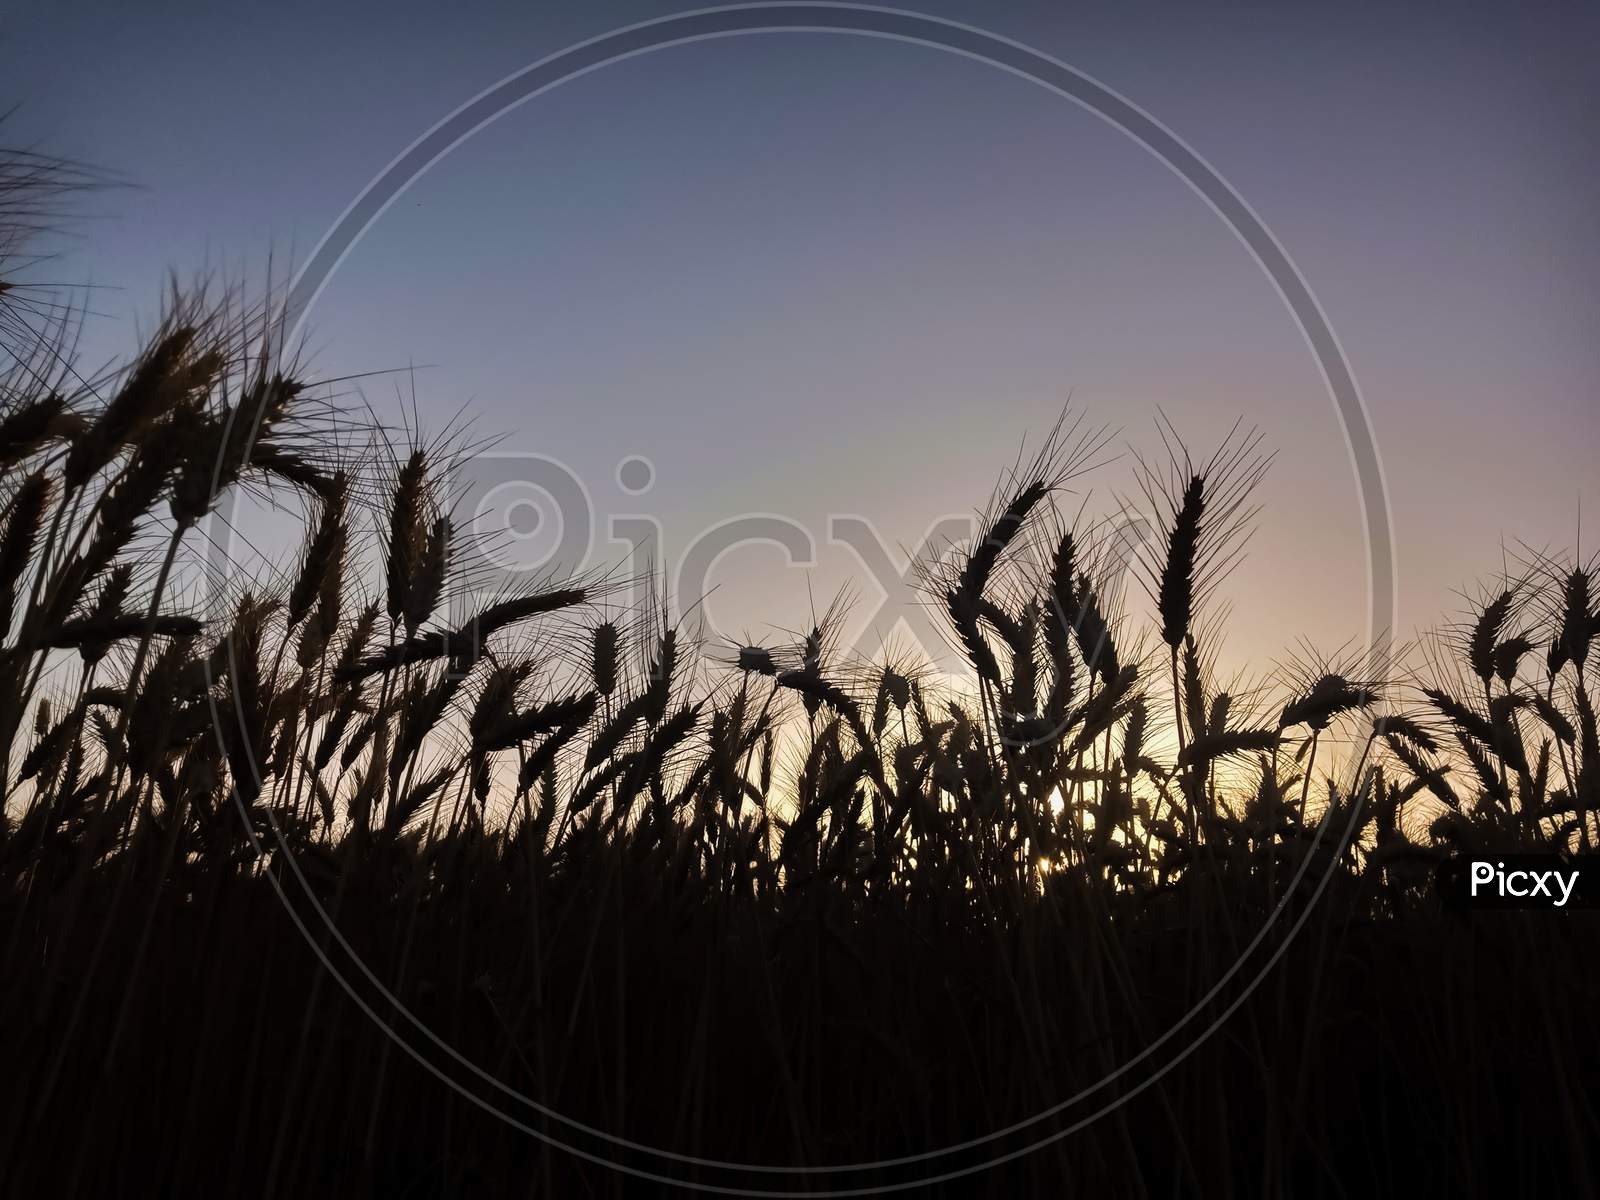 Wheat Field At Sunset